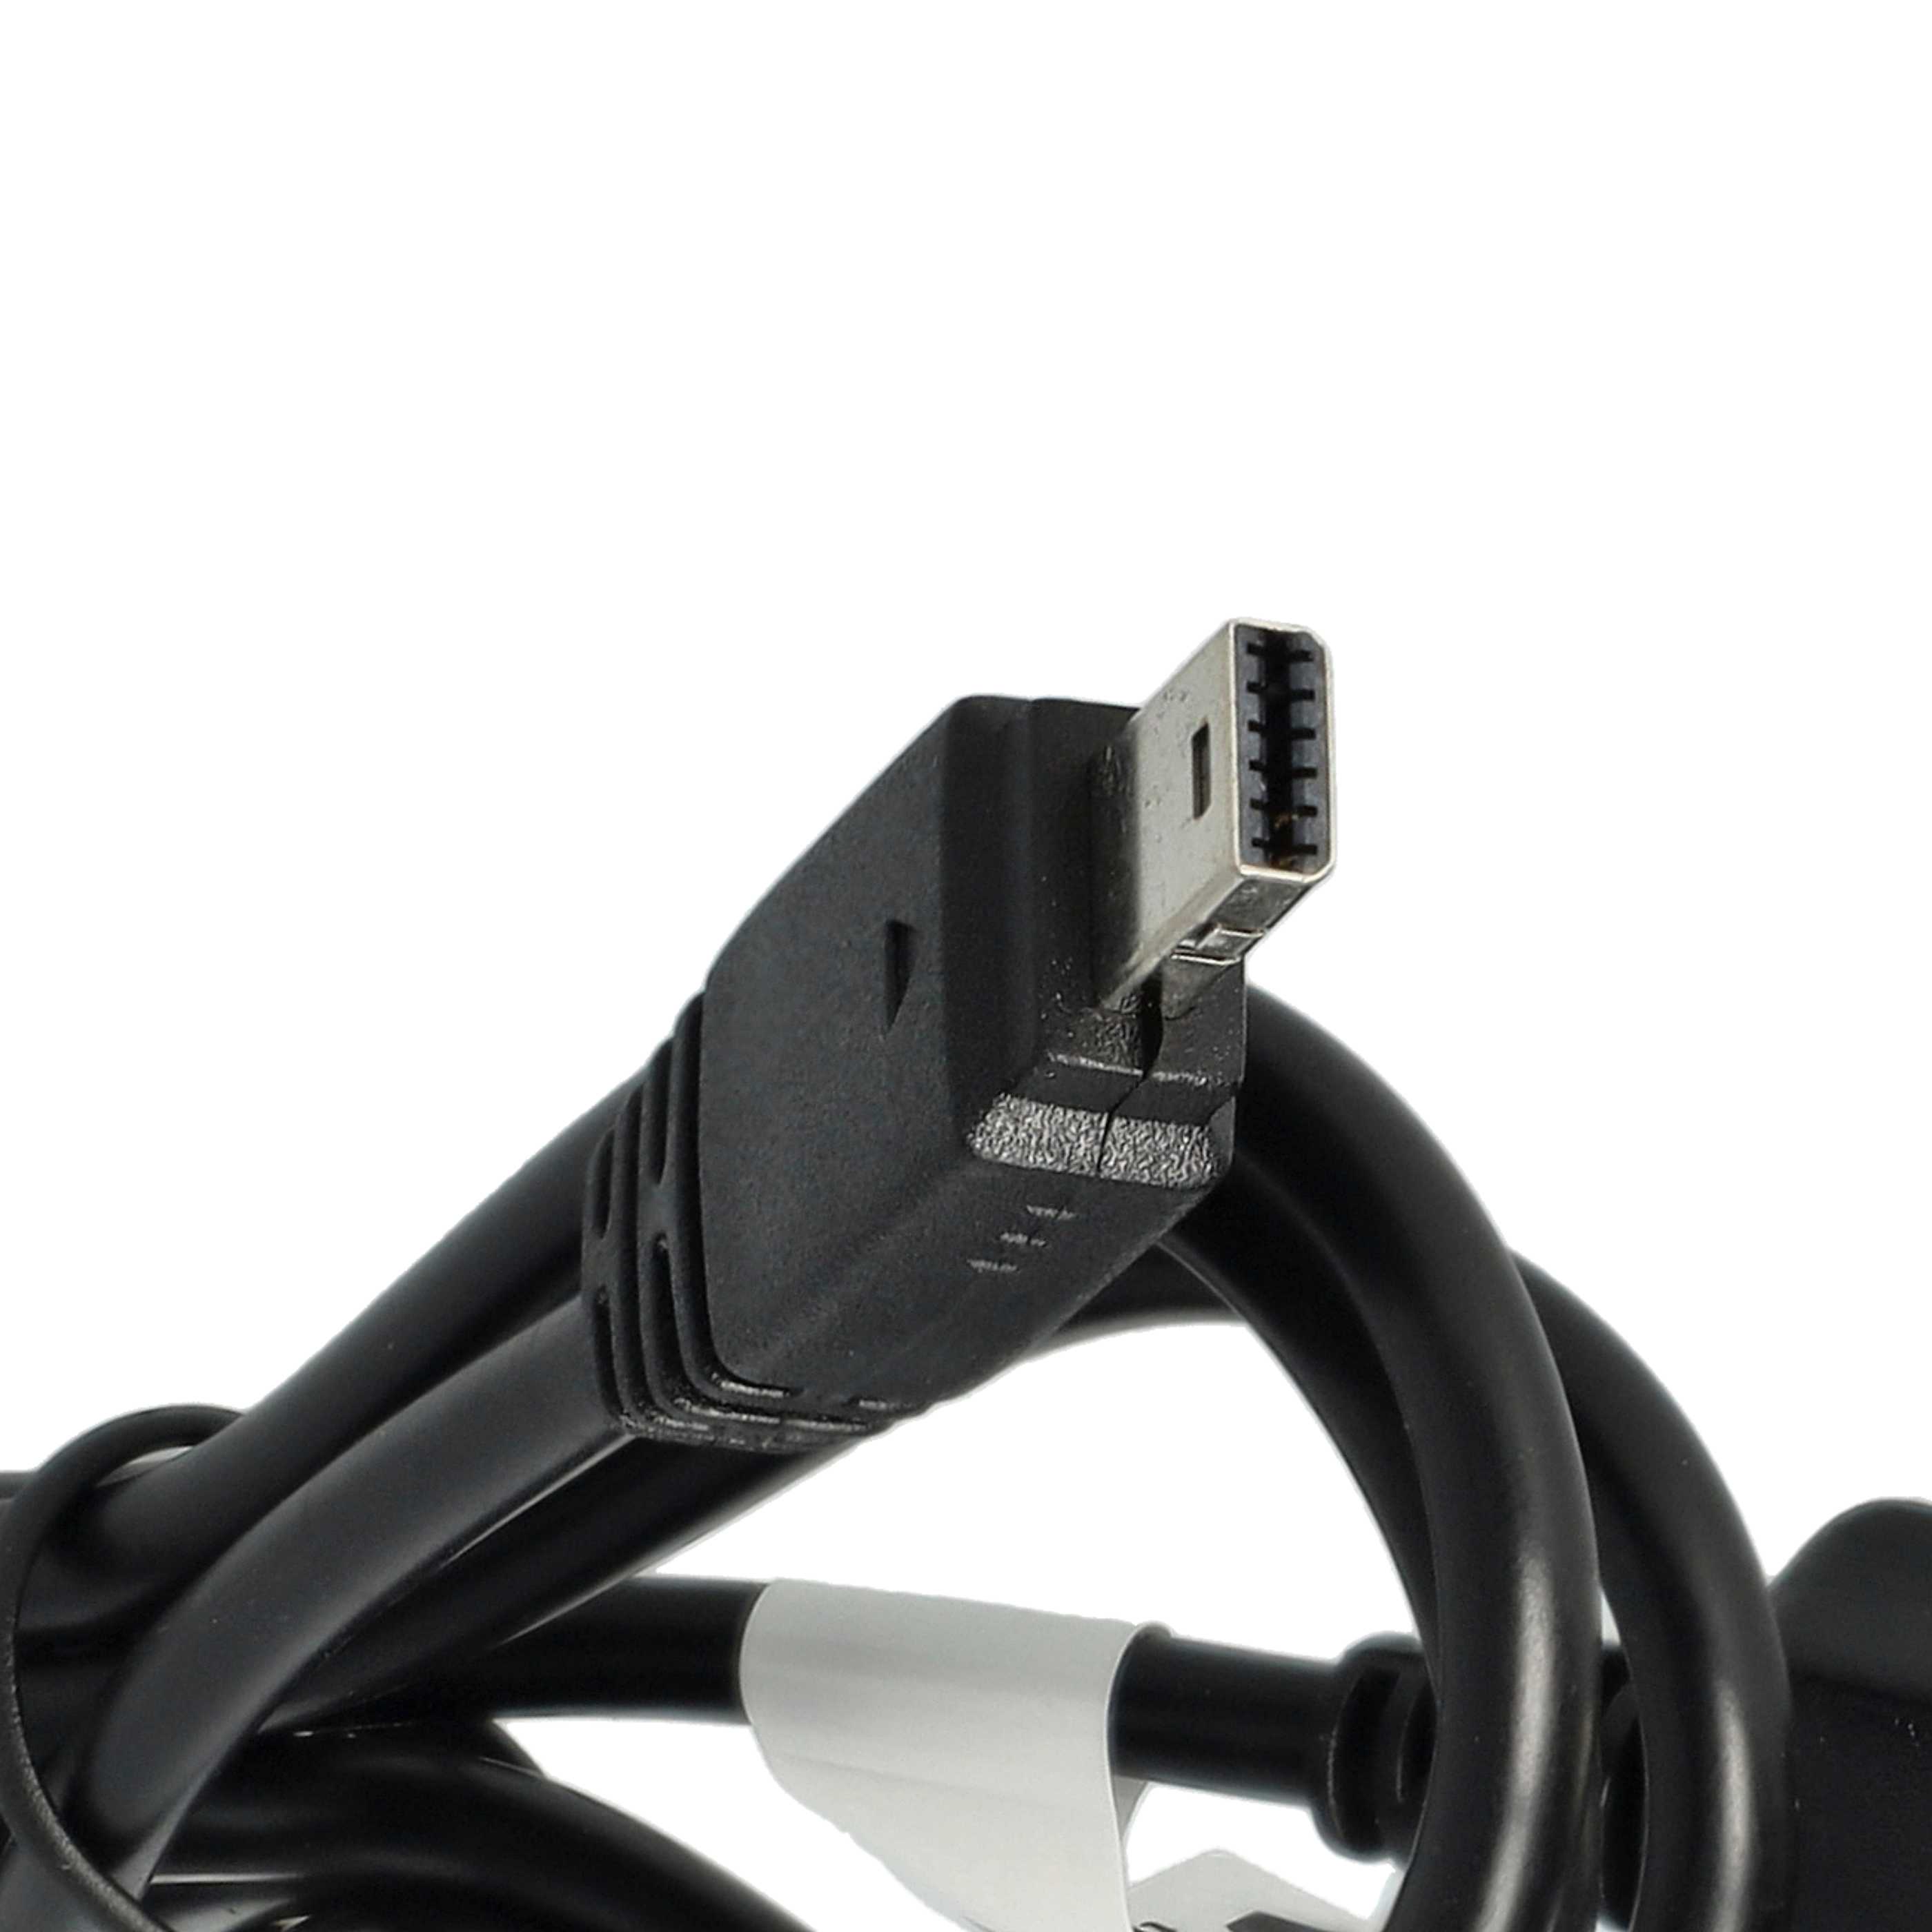 Câble de transfert USB remplace Casio U-8, EMC-6U, EMC-6 pour appareil photo Casio – 100 cm